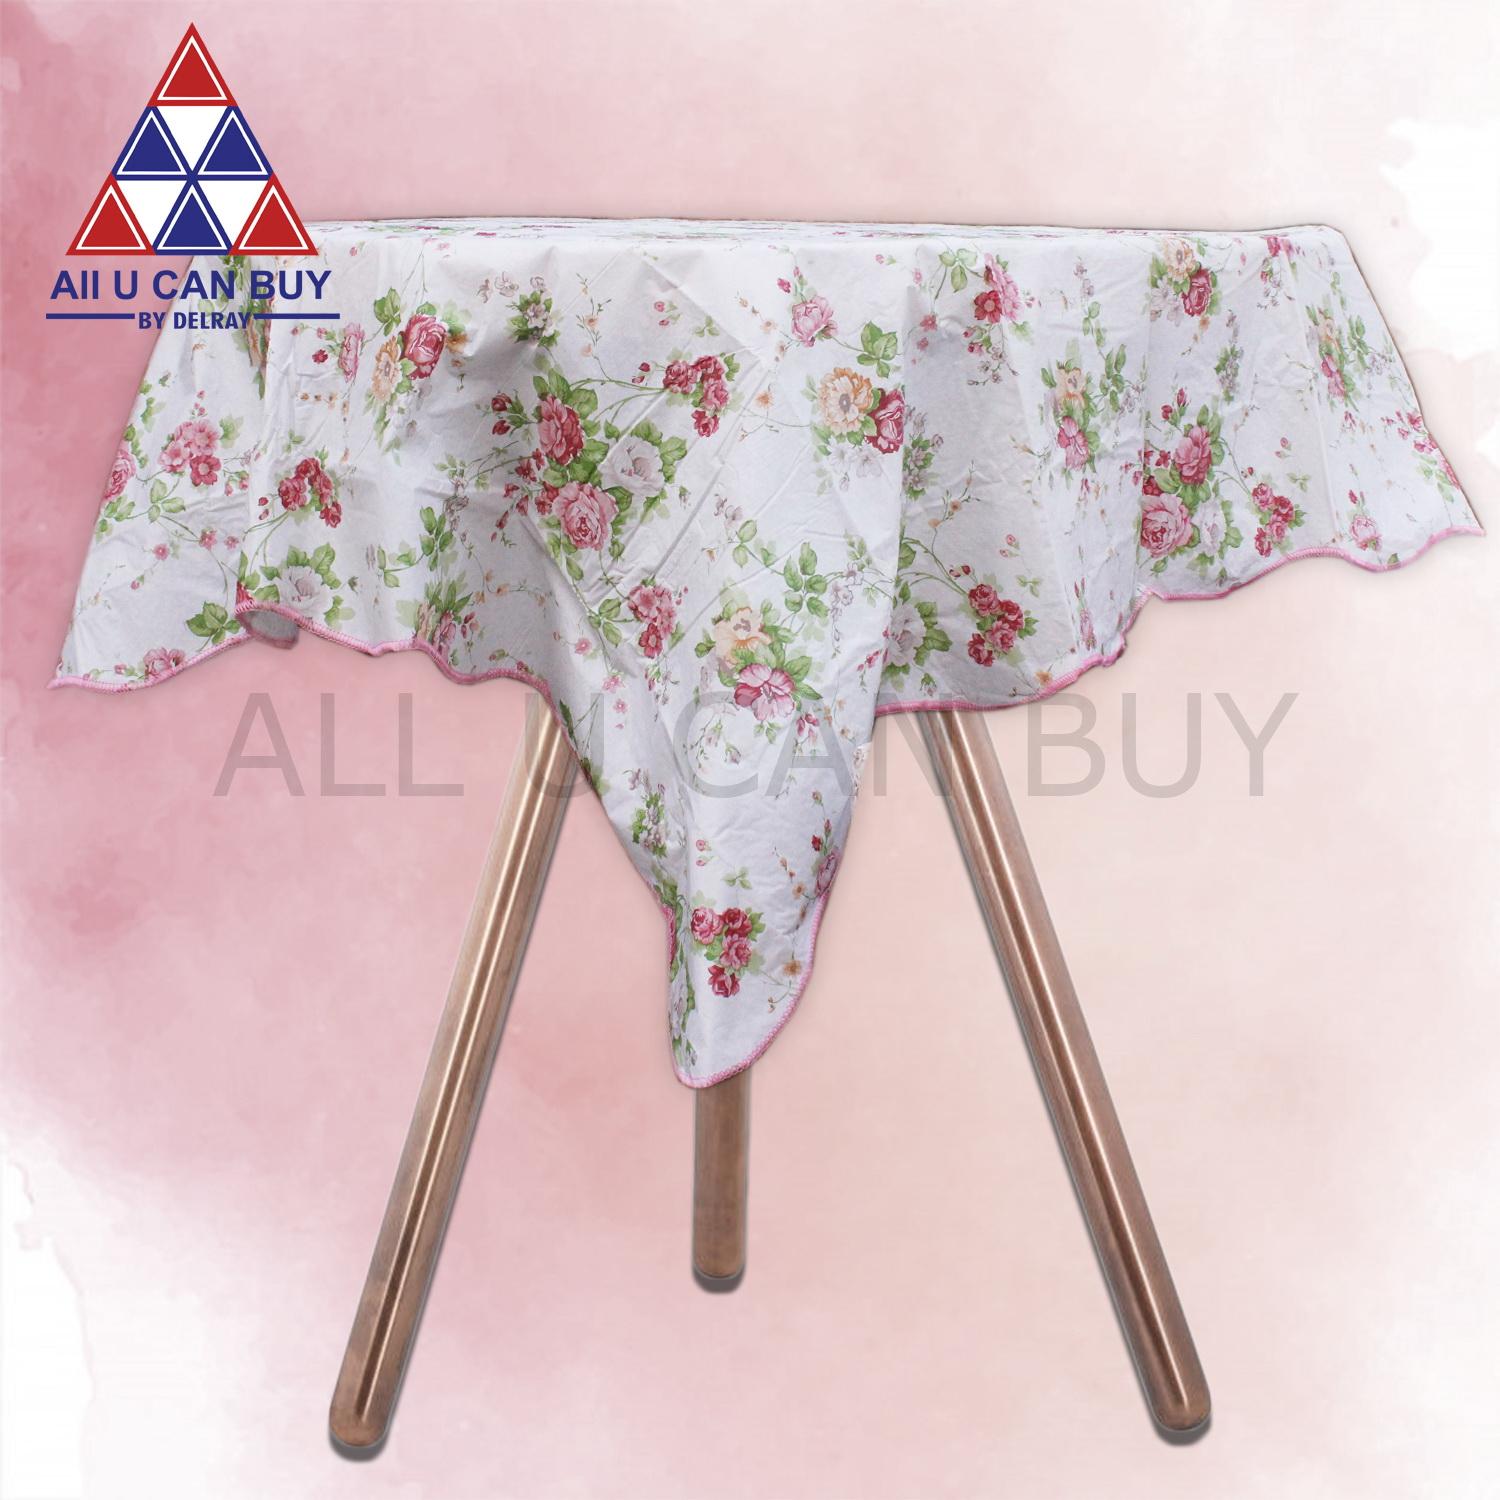 ALL U CAN BUY ผ้าปูโต๊ะ ผ้าคลุมโต๊ะสี่เหลี่ยม ผ้าปูโต๊ะขนาดใหญ่ ผ้าปูโต๊ะกันน้ำ ผ้าปูโต๊ะลายดอกไม้สีชมพู